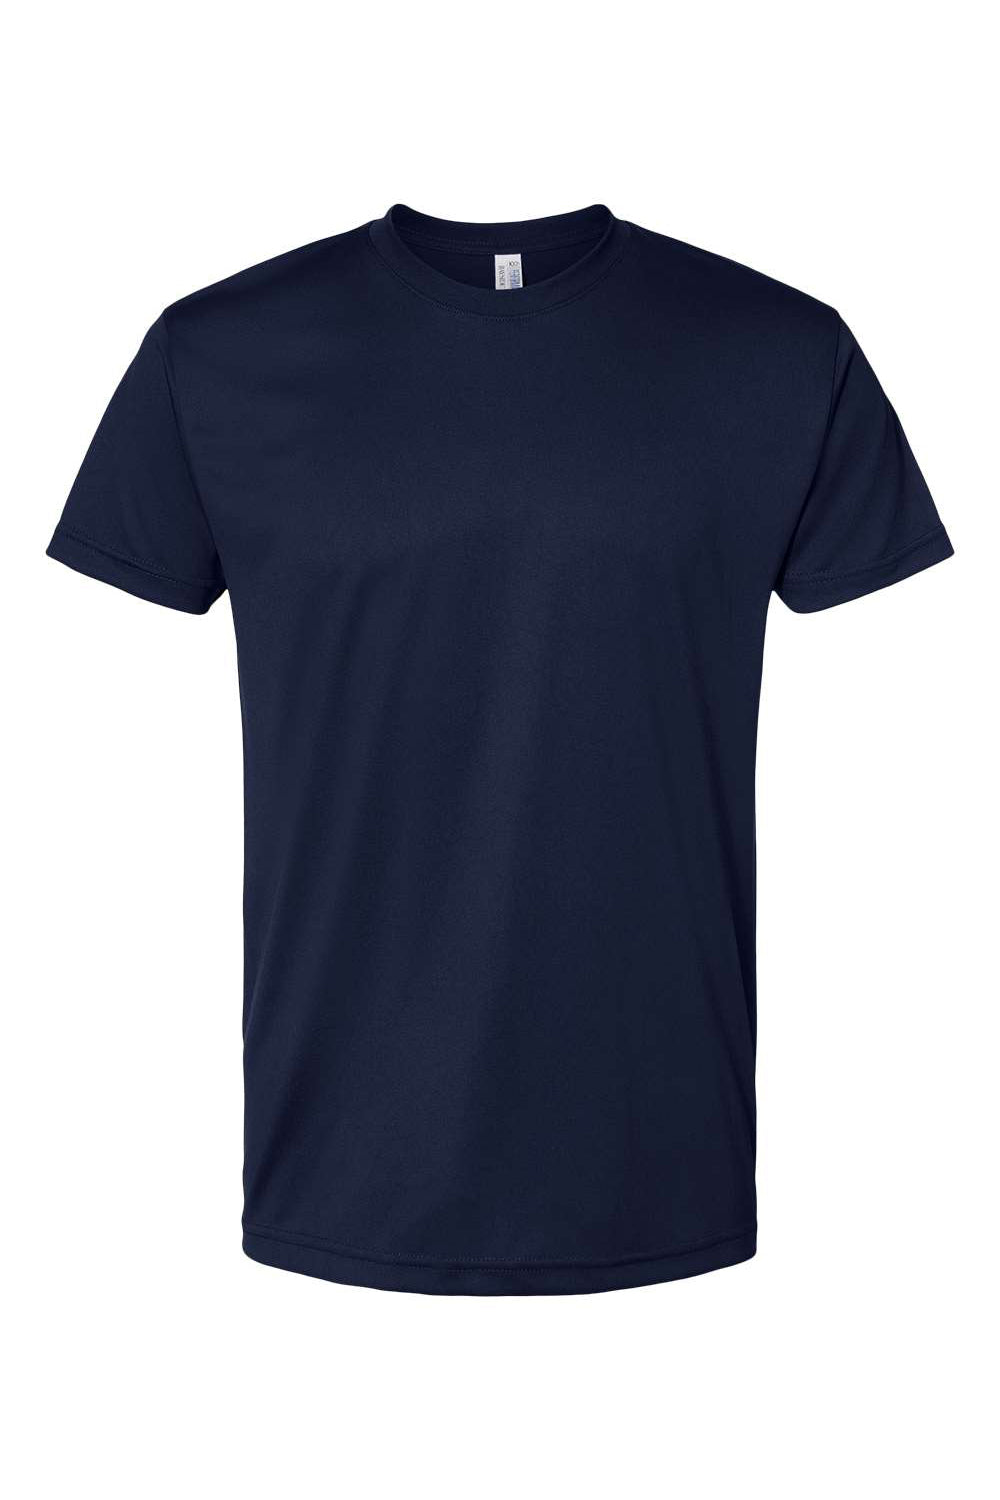 Bayside 5300 Mens USA Made Performance Short Sleeve Crewneck T-Shirt Navy Blue Flat Front